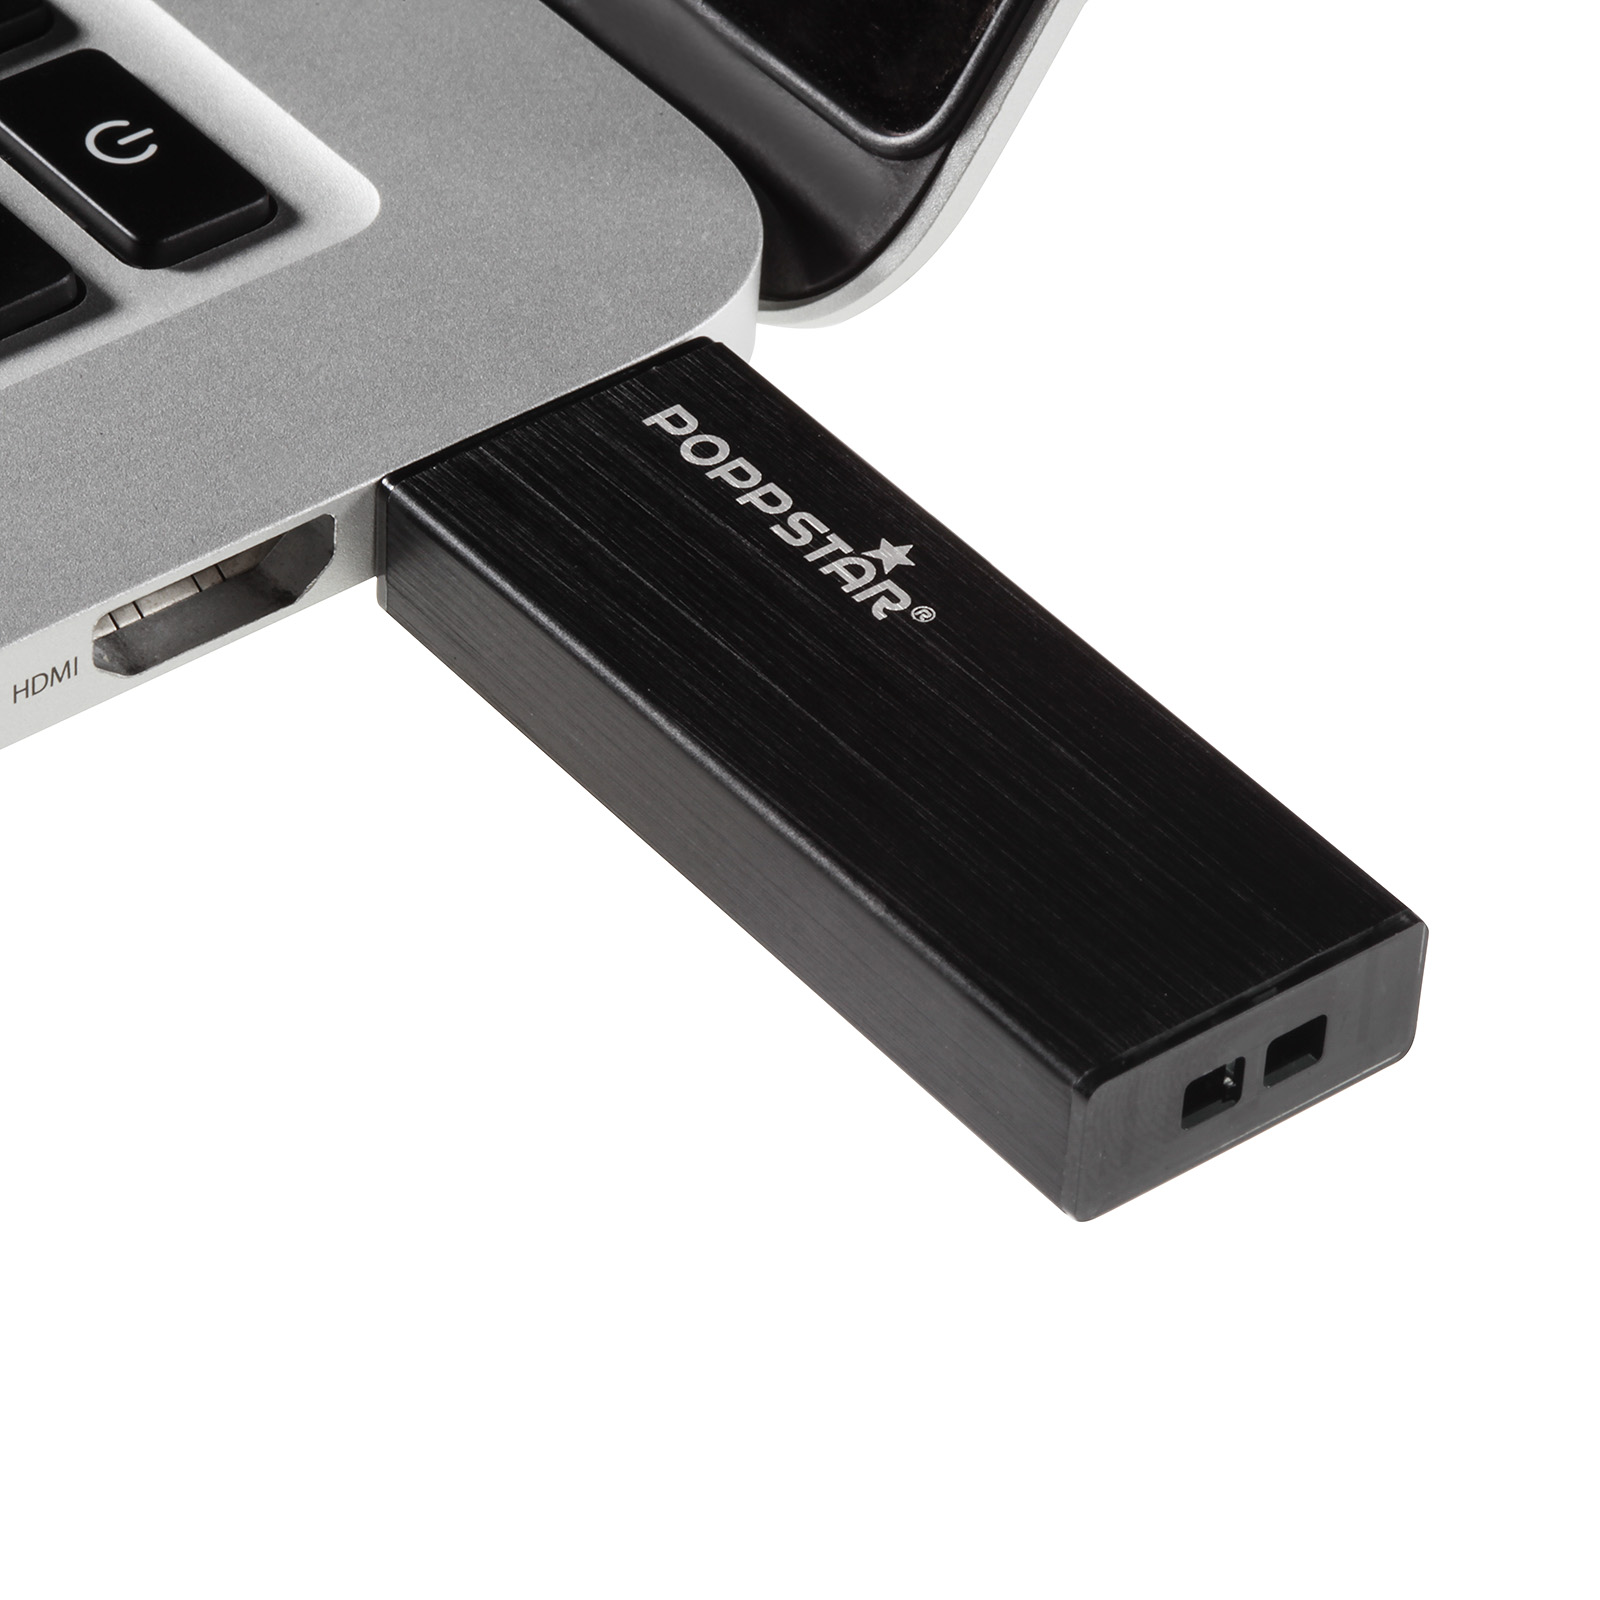 Poppstar Brush USB 3.0 Stick, 128 GB, aus gebürstetem Aluminium, Speicherstick